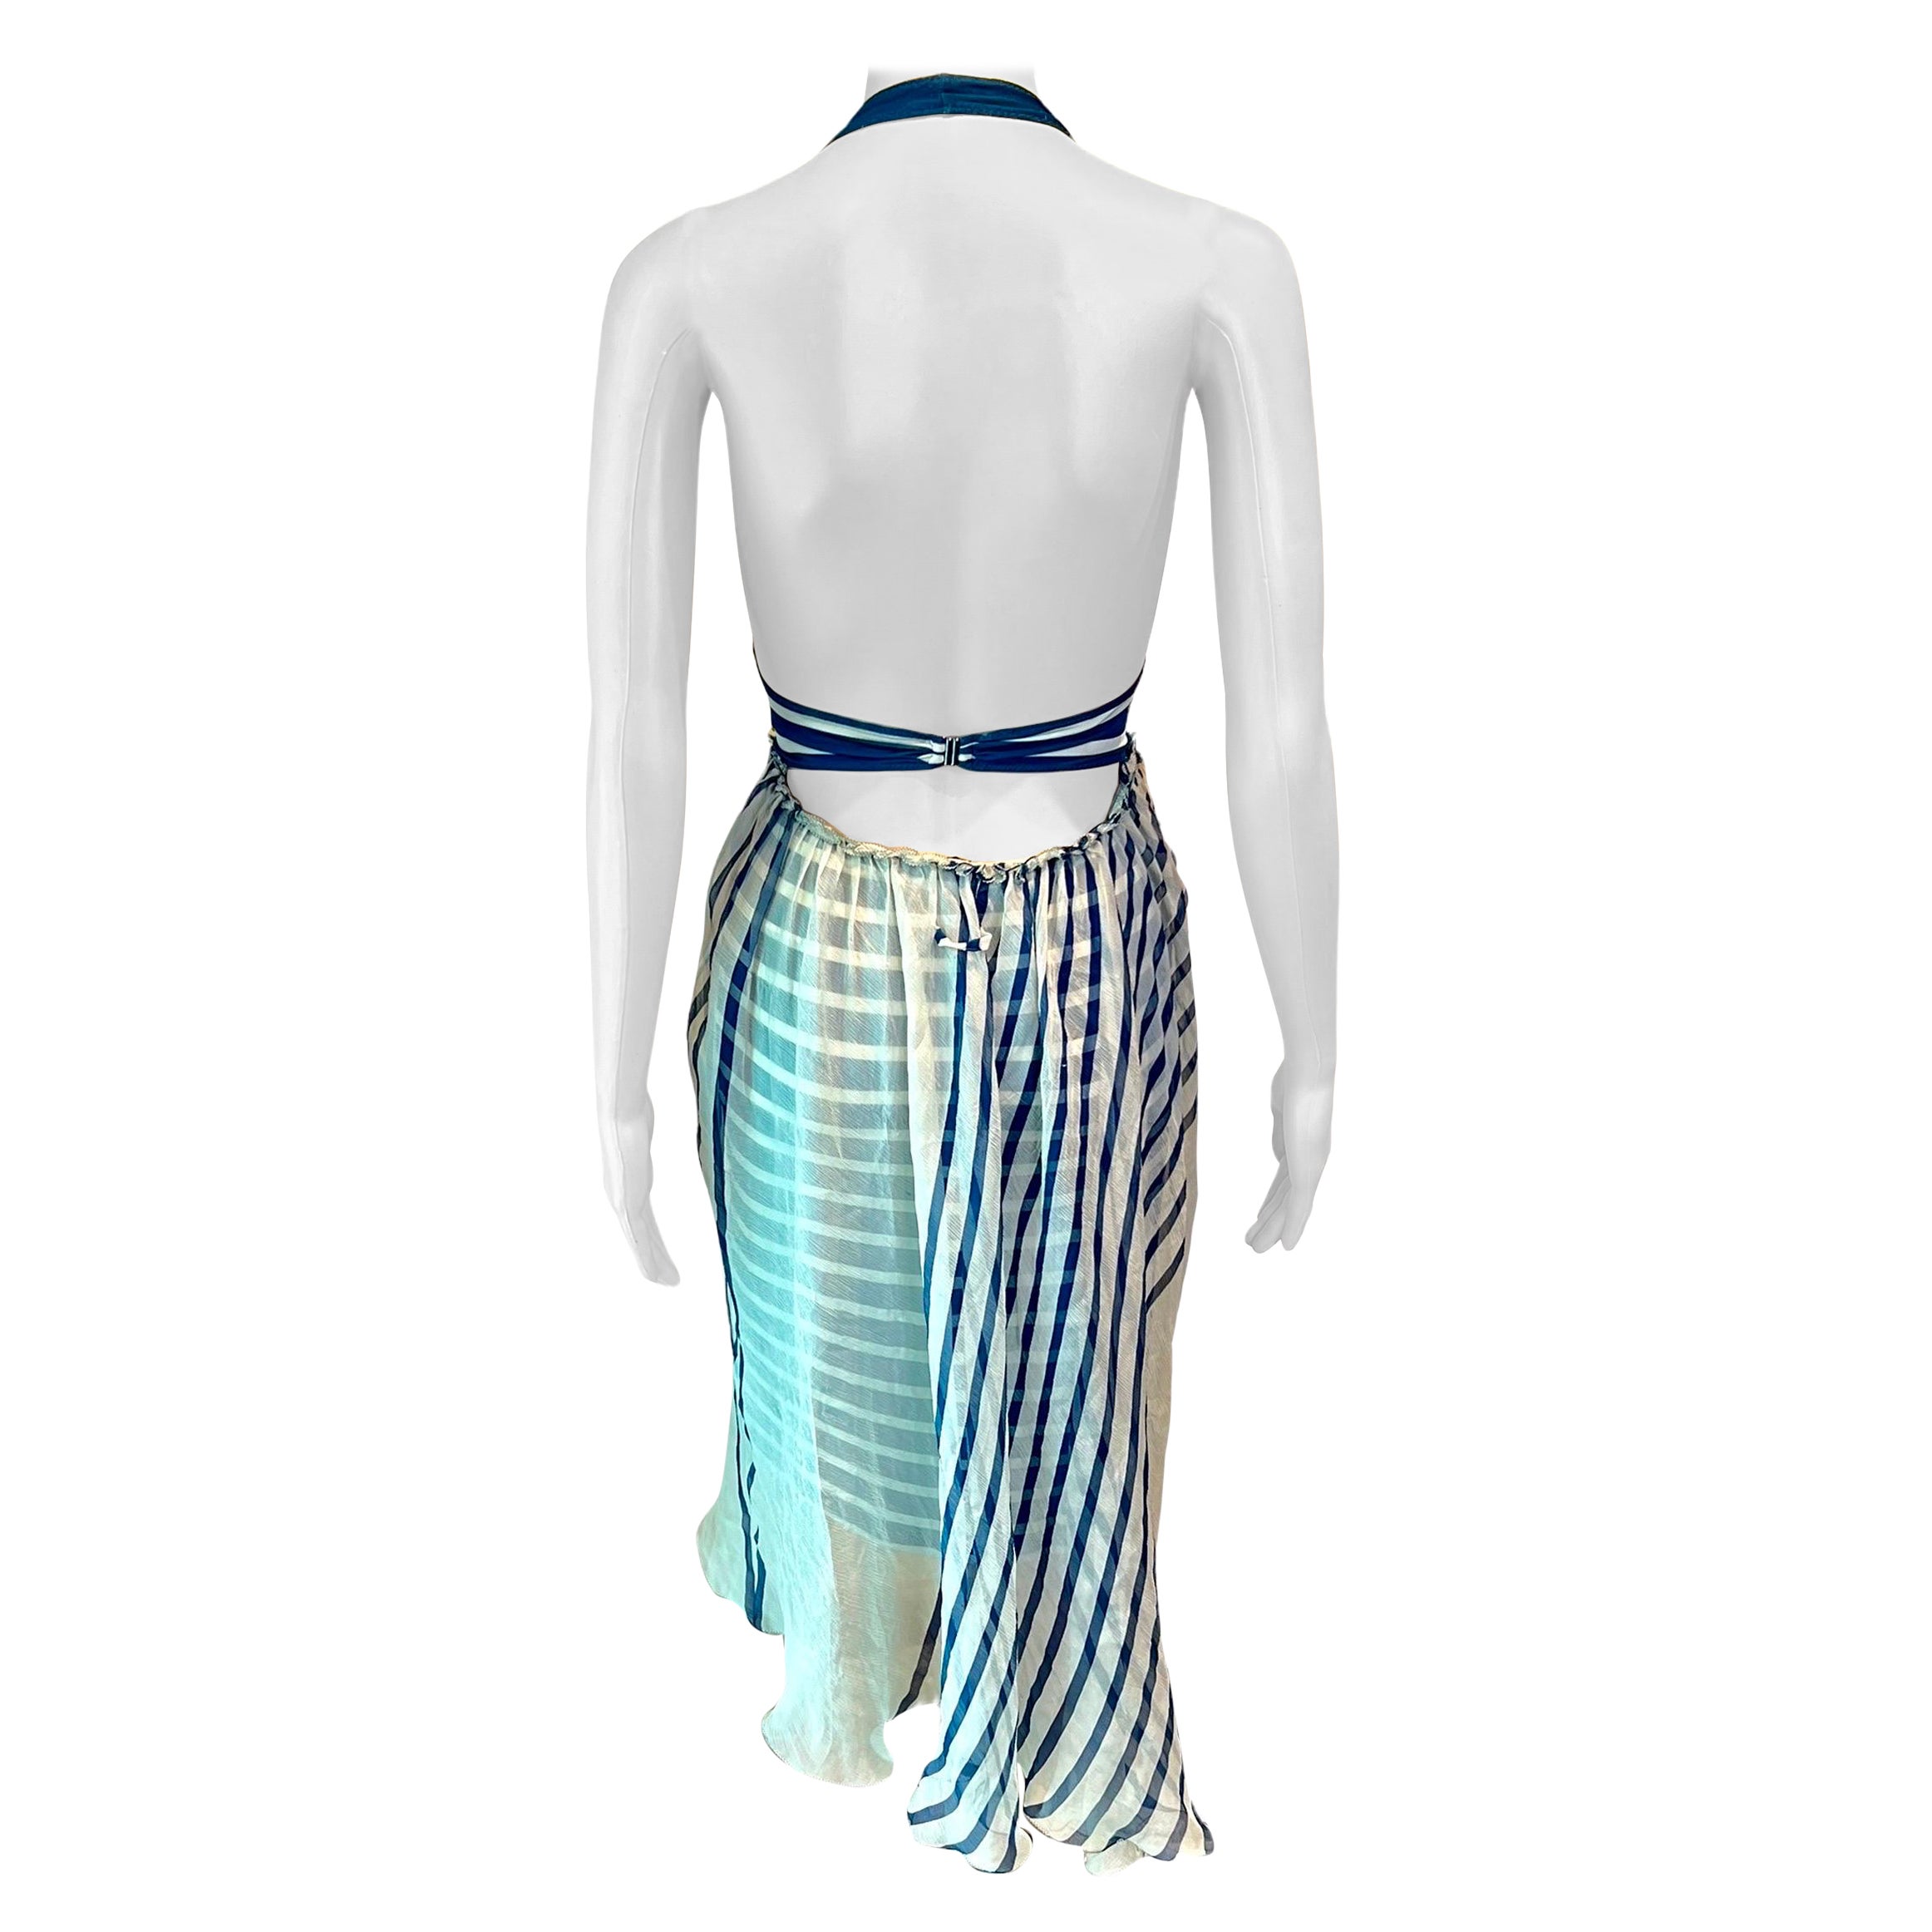 Jean Paul Gaultier Soleil S/S 2001 Striped Ivory & Navy Blue Cutout Back Dress  For Sale